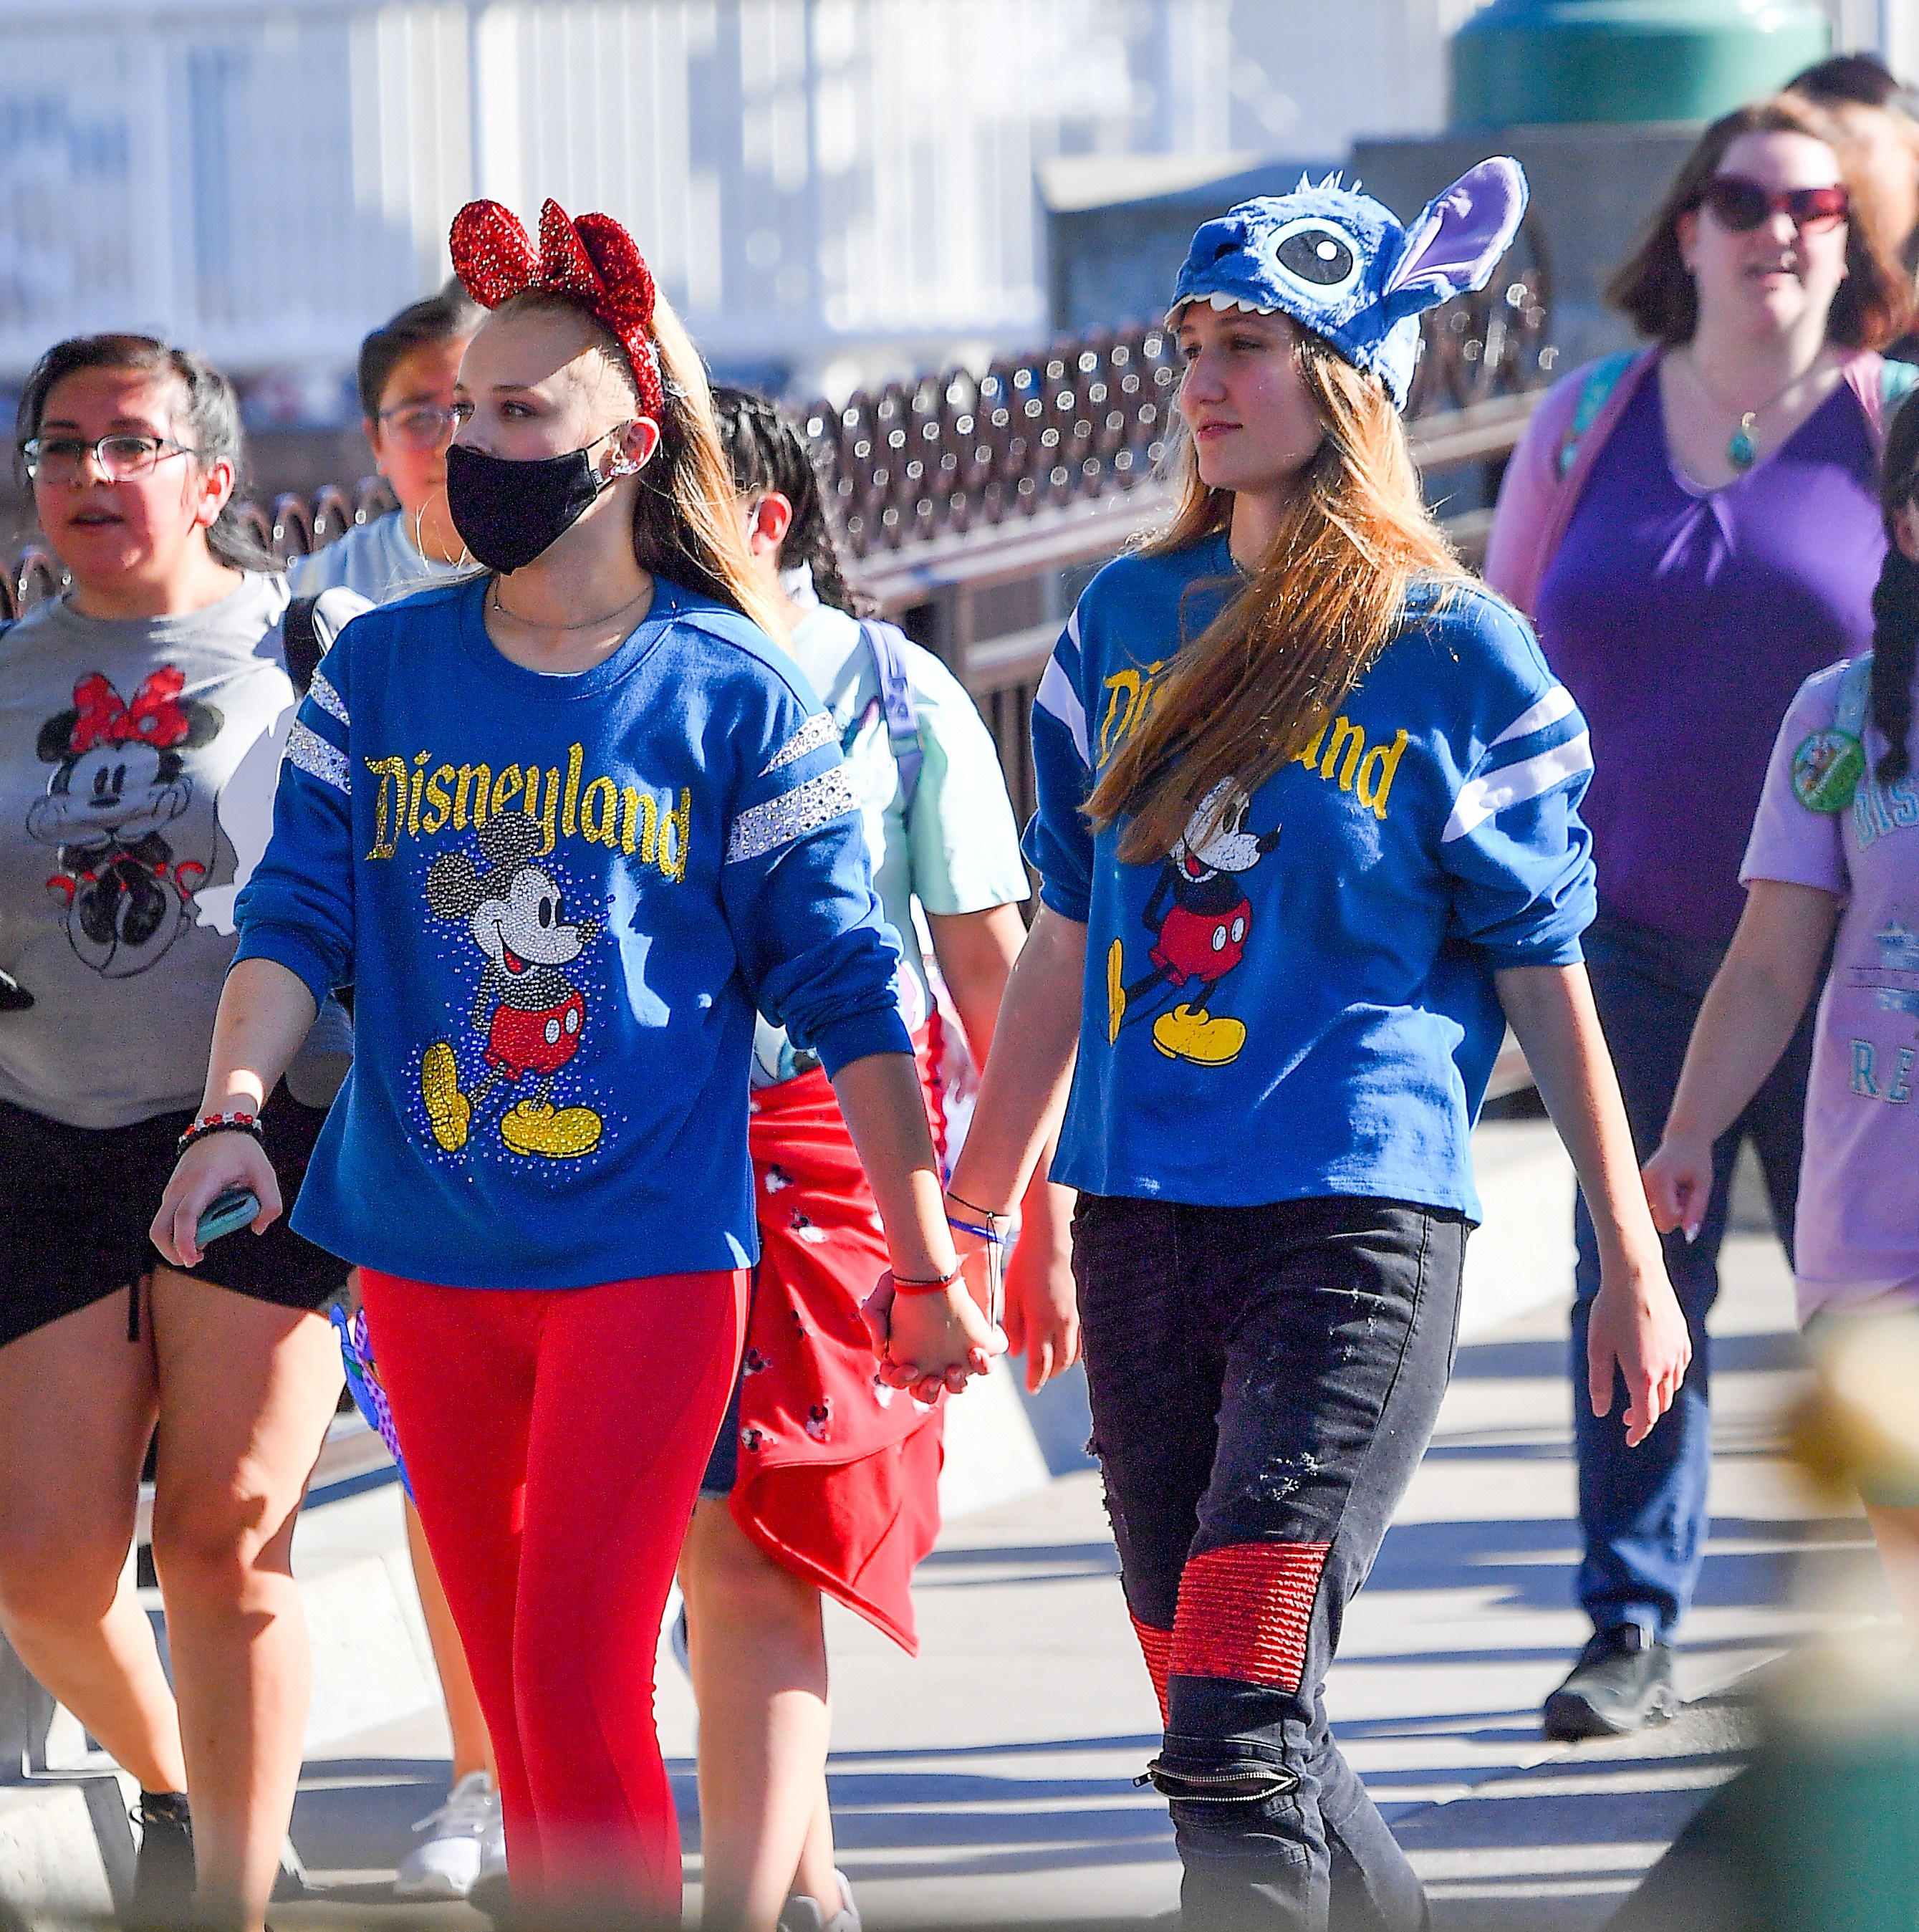 DWTS' JoJo Siwa, GF Kylie Prew Have Date Night at Disneyland: Photos